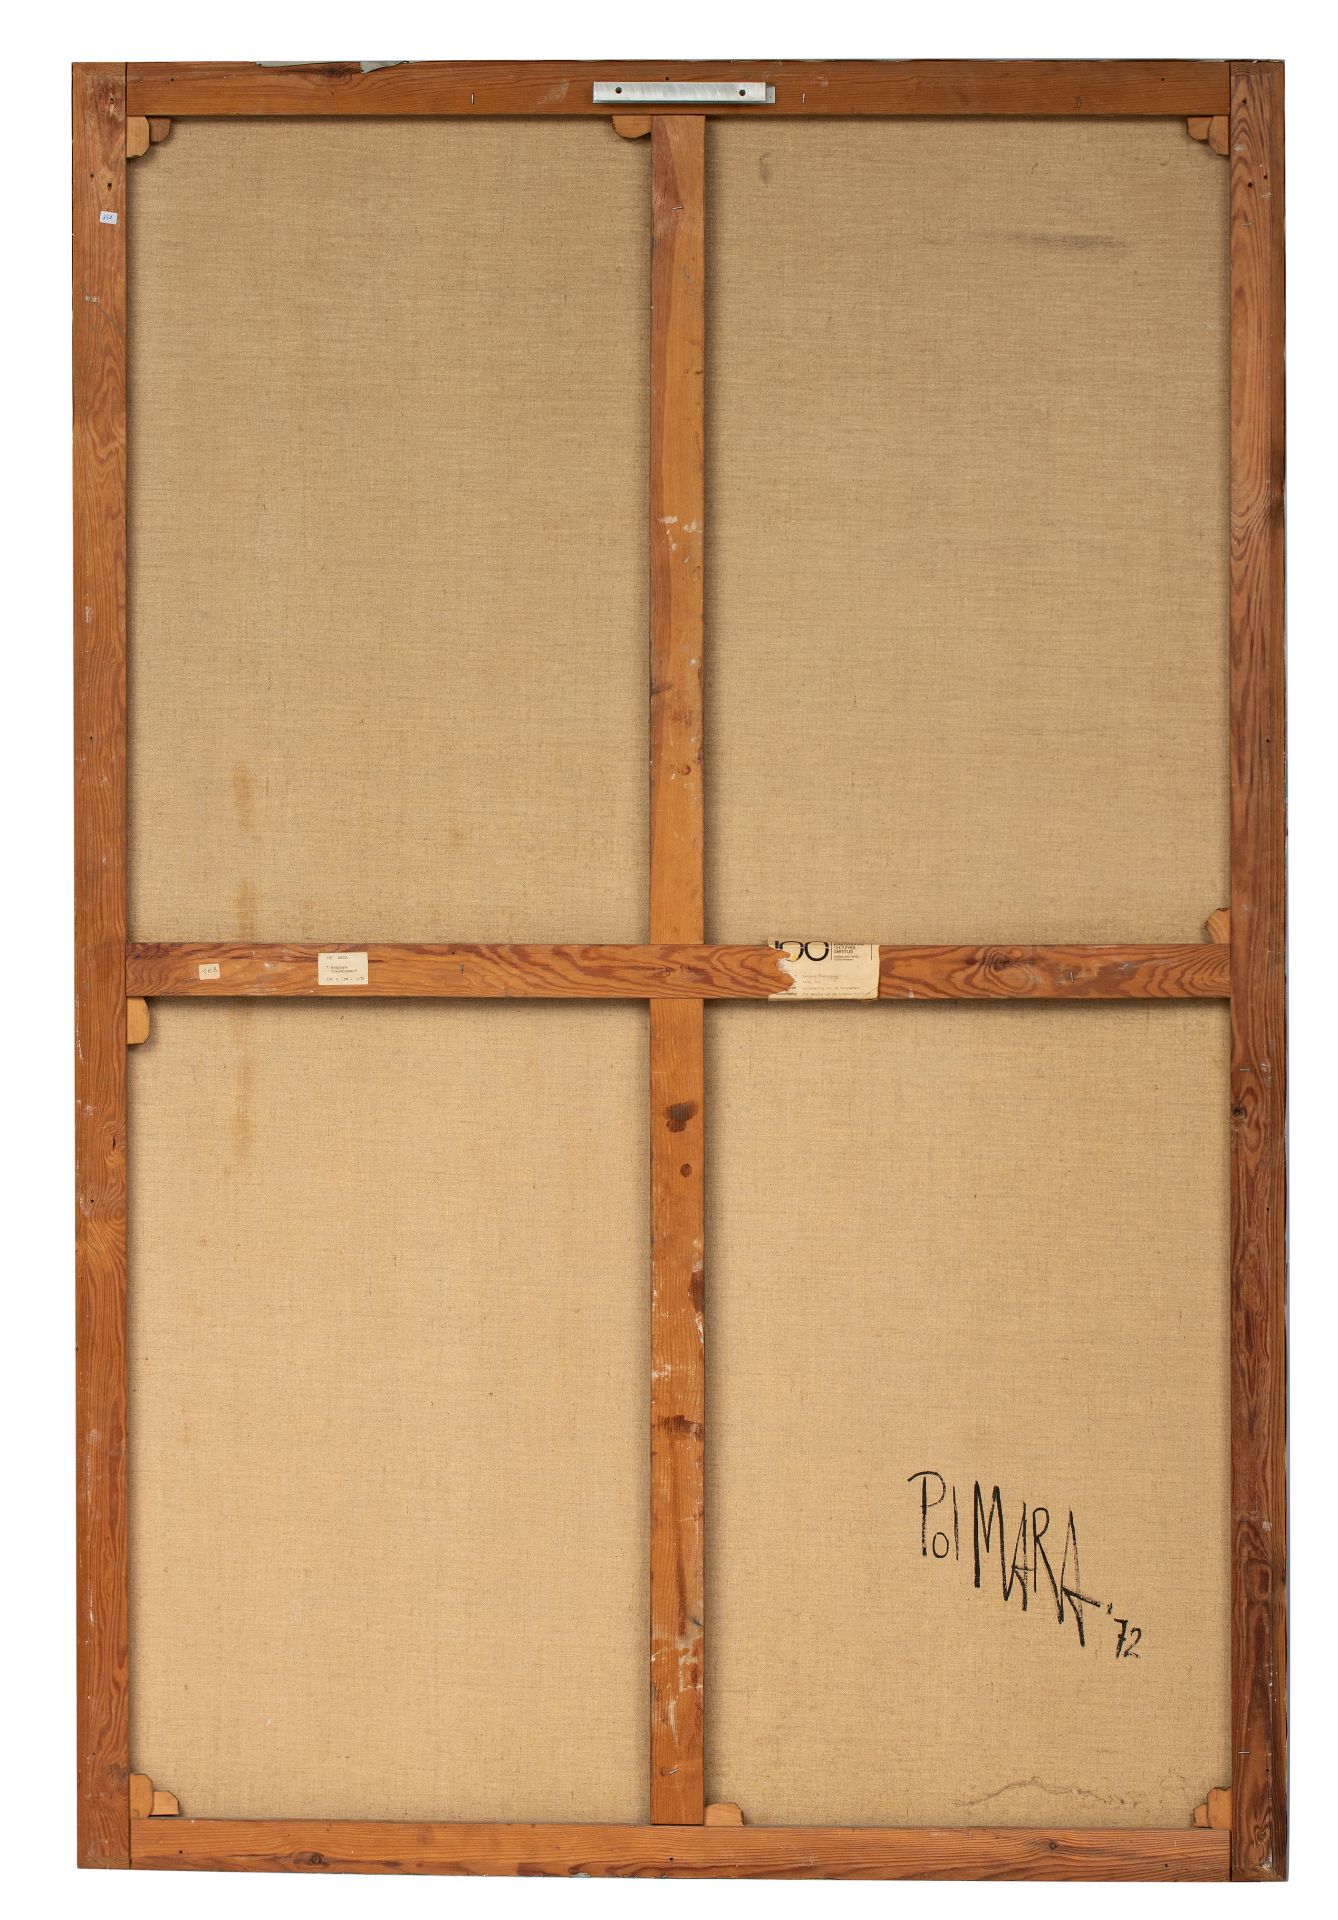 Pol Mara (1920-1998), Thermal sensors, grease pencil and oil on canvas, 1972, 130 x 195 cm - Bild 3 aus 7